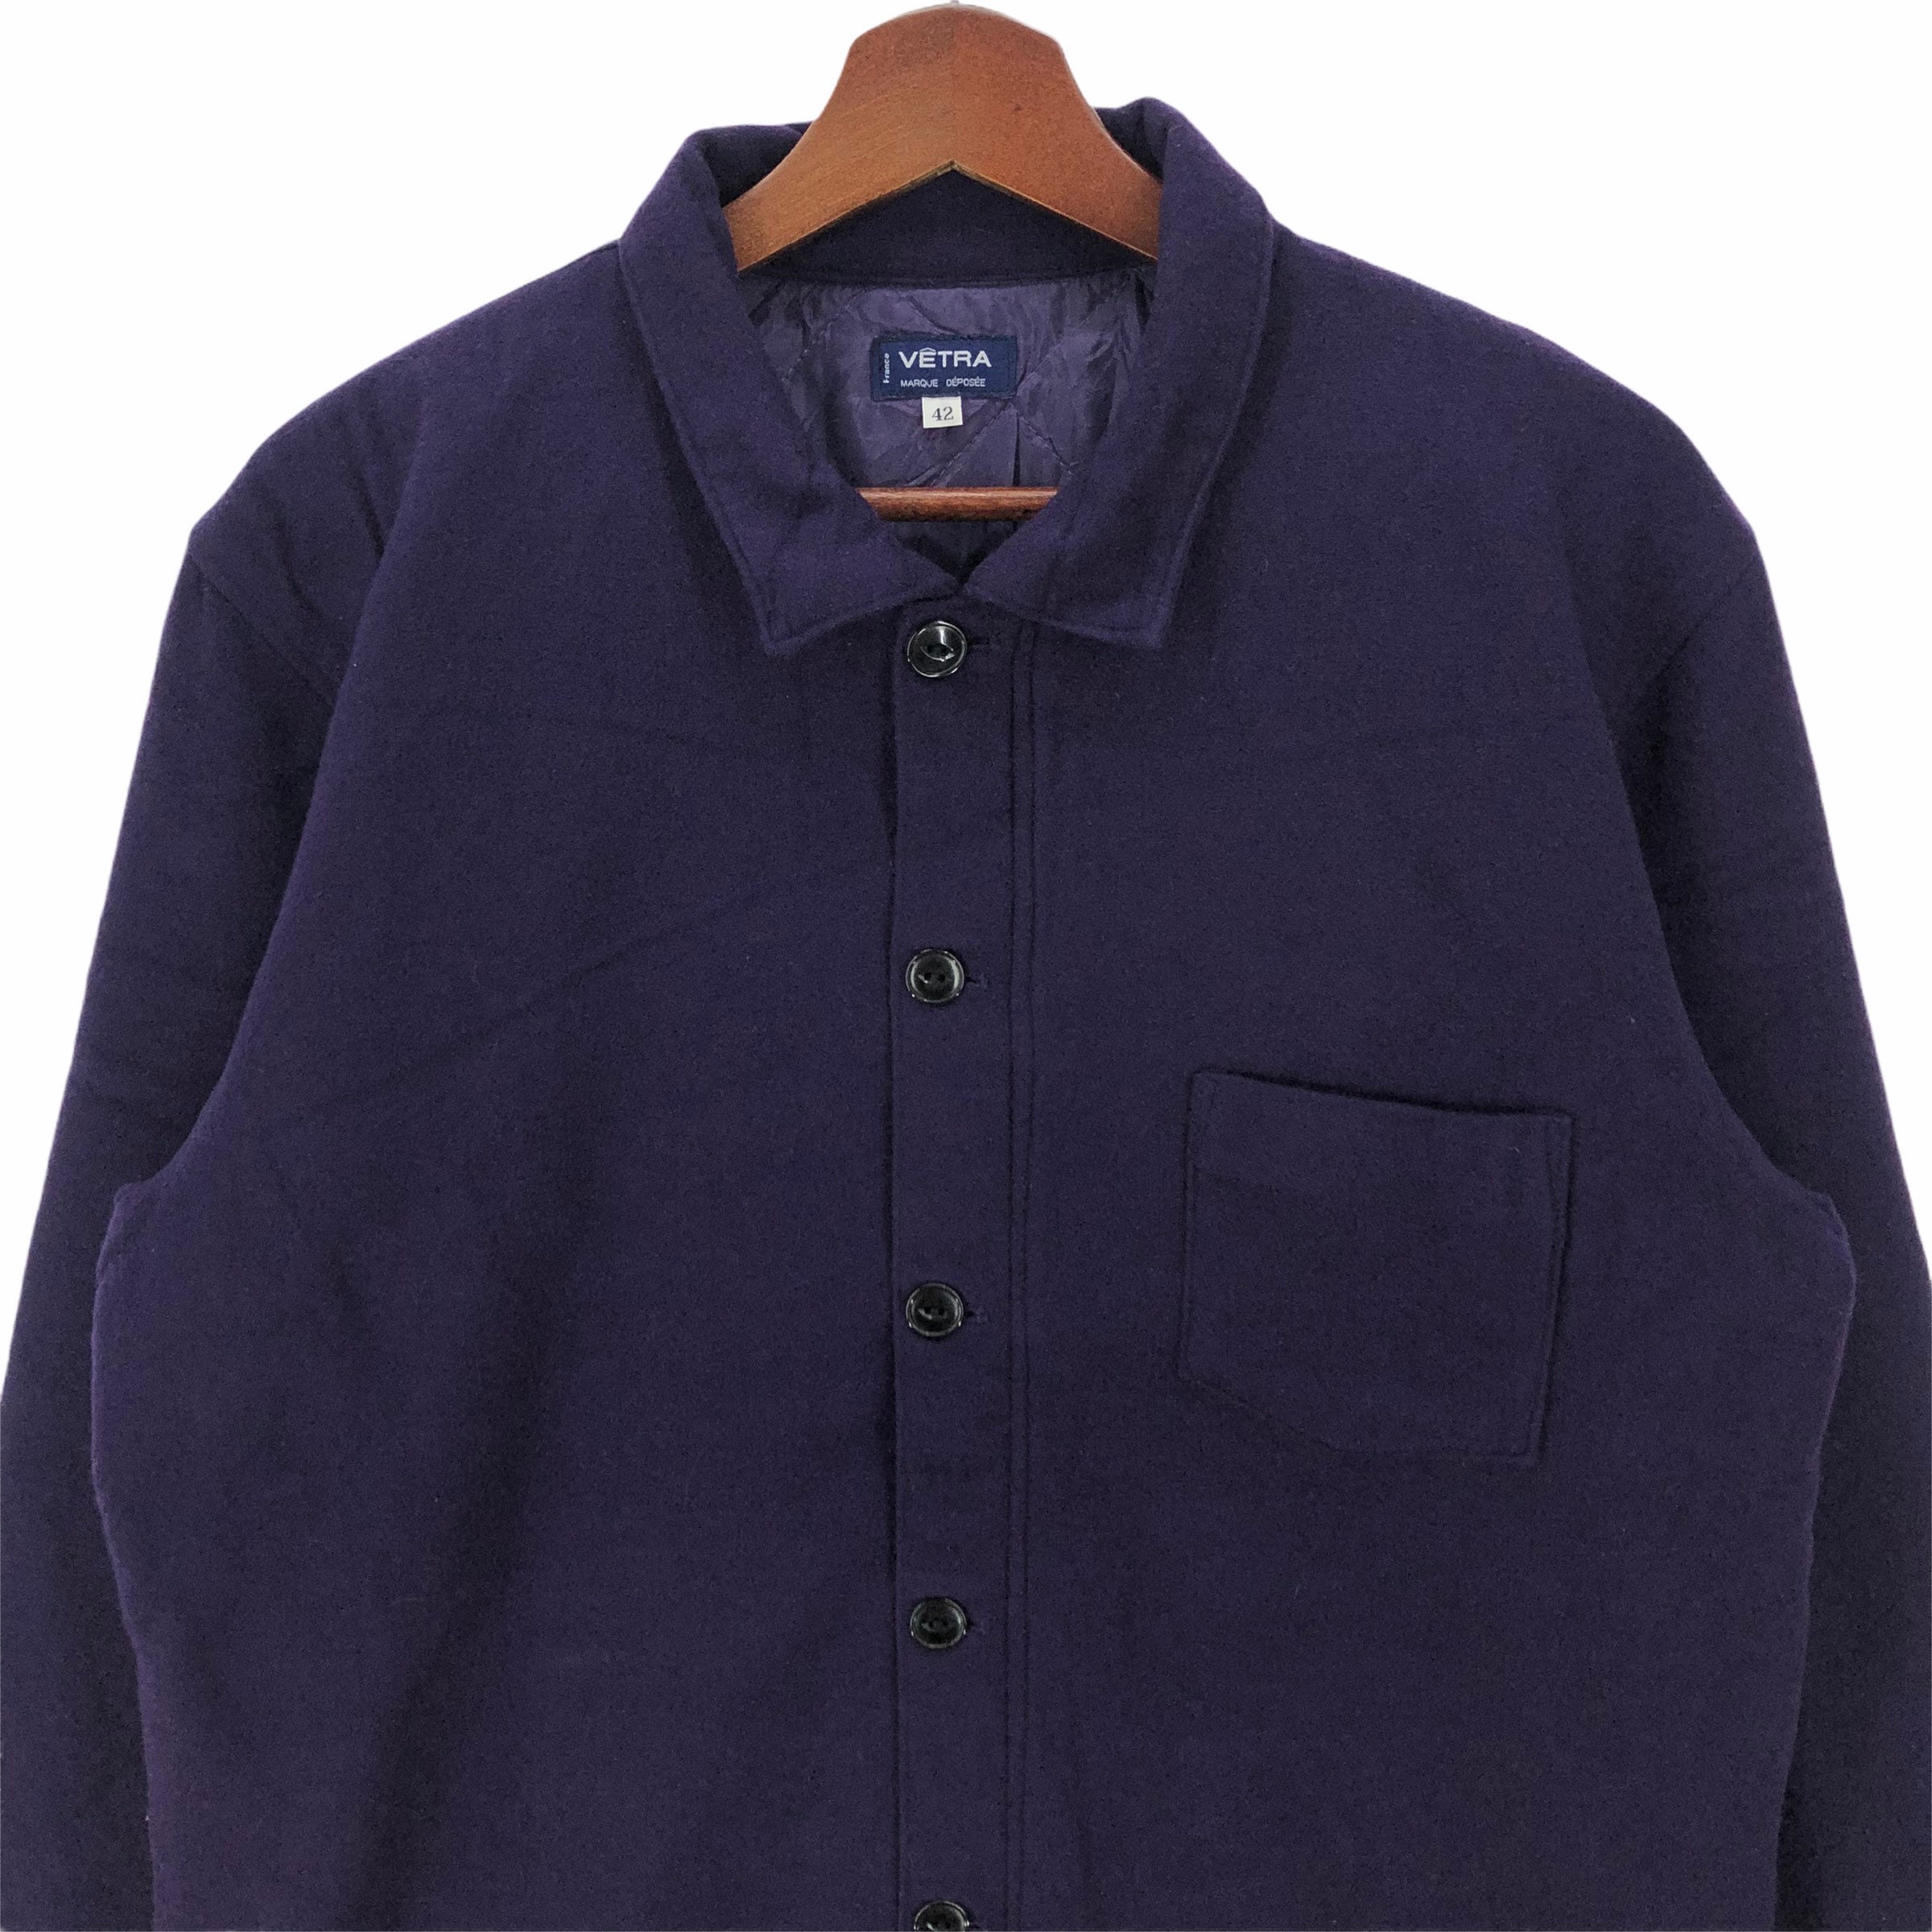 Vintage Vetra Wool Shirt Jacket Made in France Size 42 Vintage Vetra ...